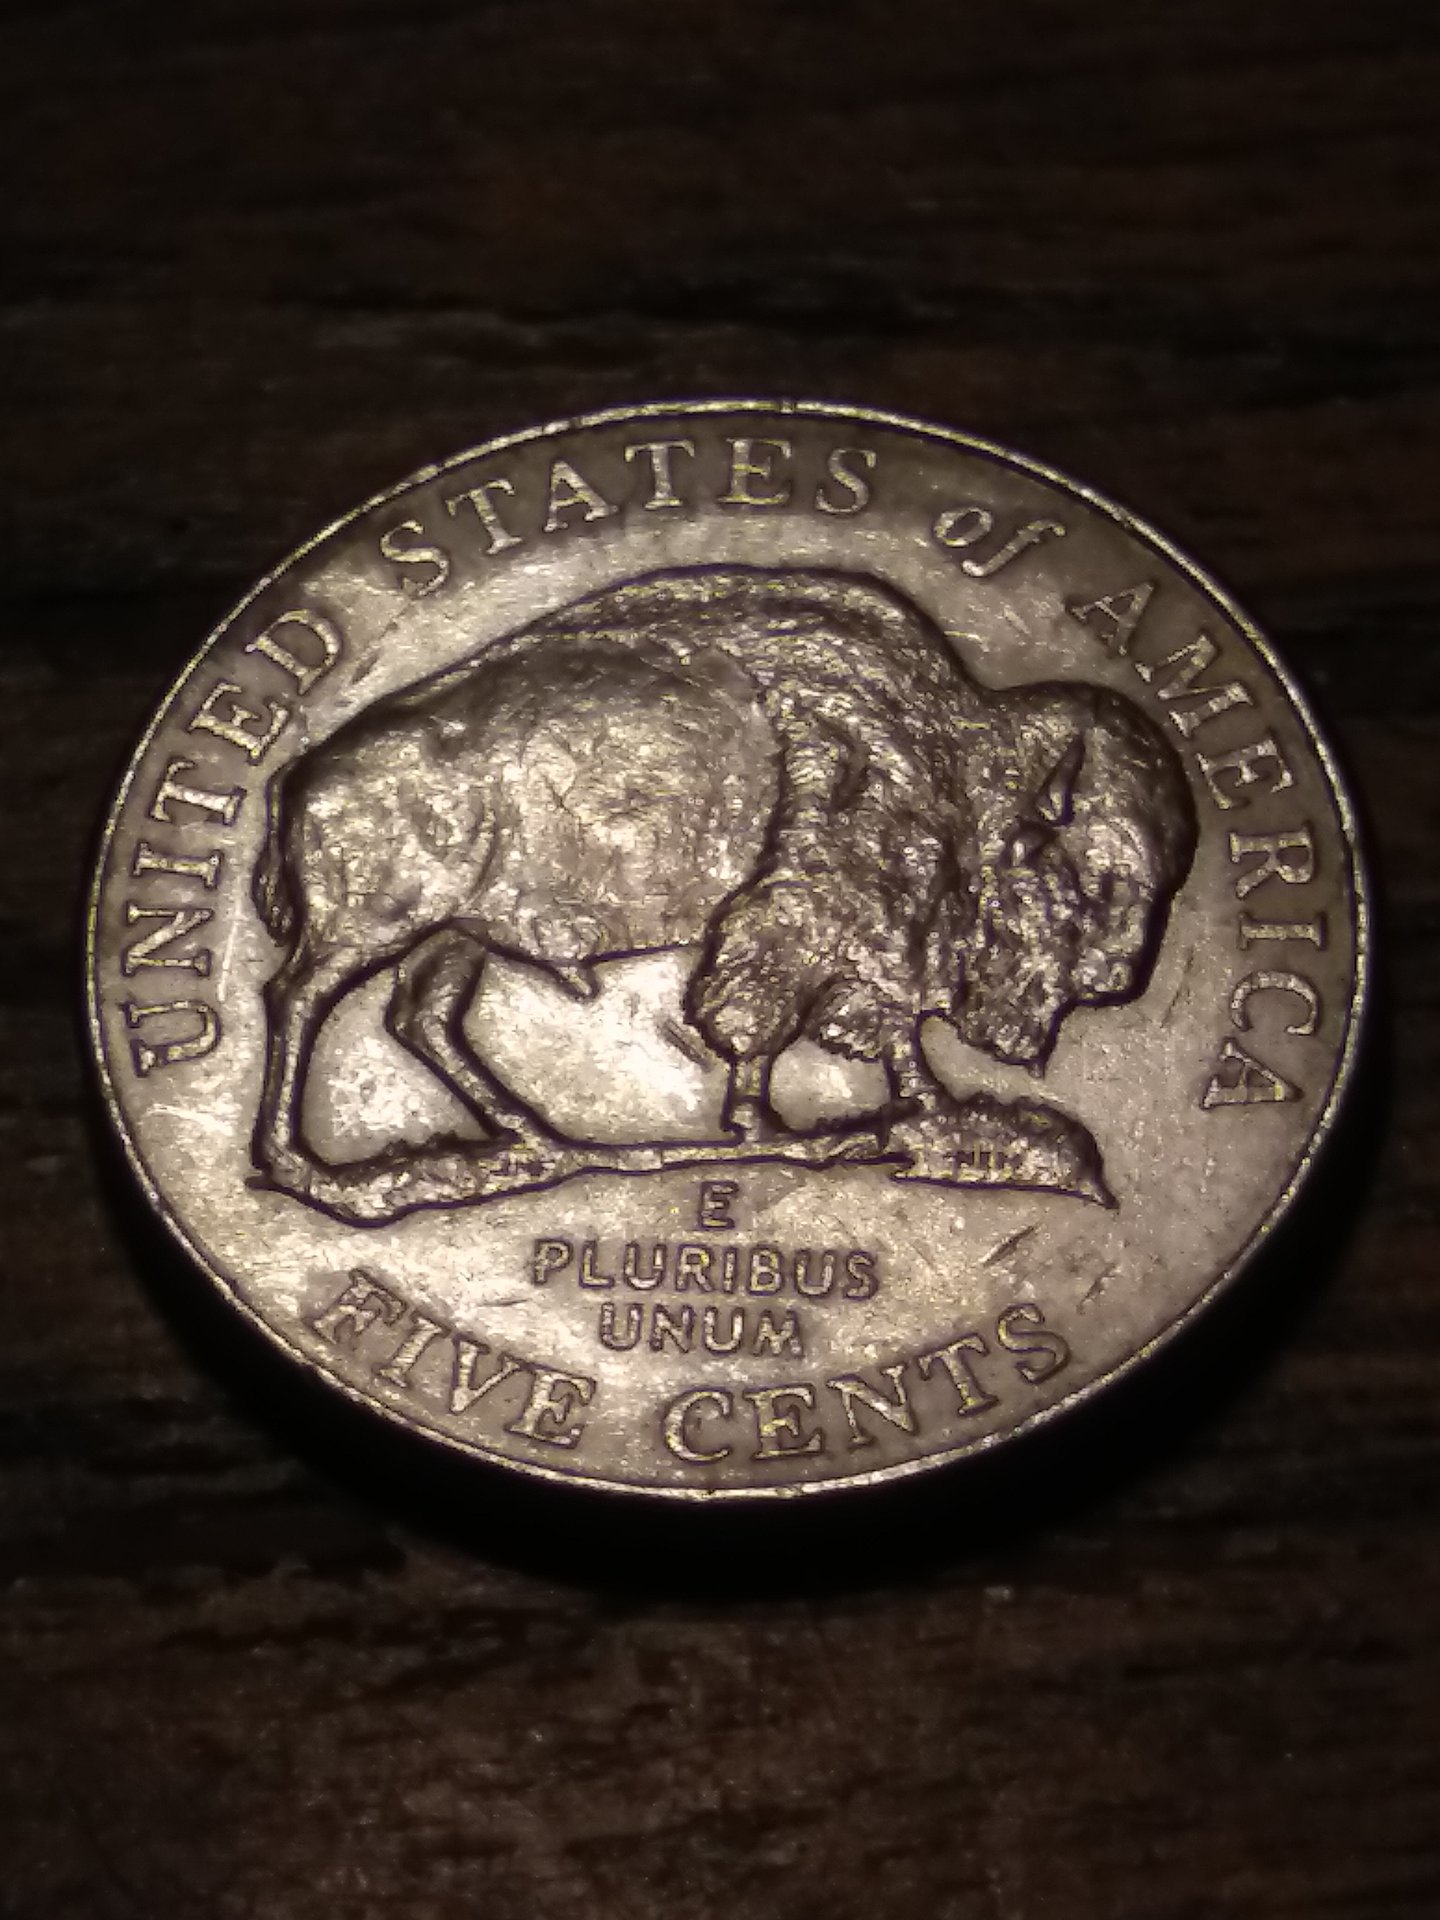 Help with 2005 buffalo nickel | Coin Talk